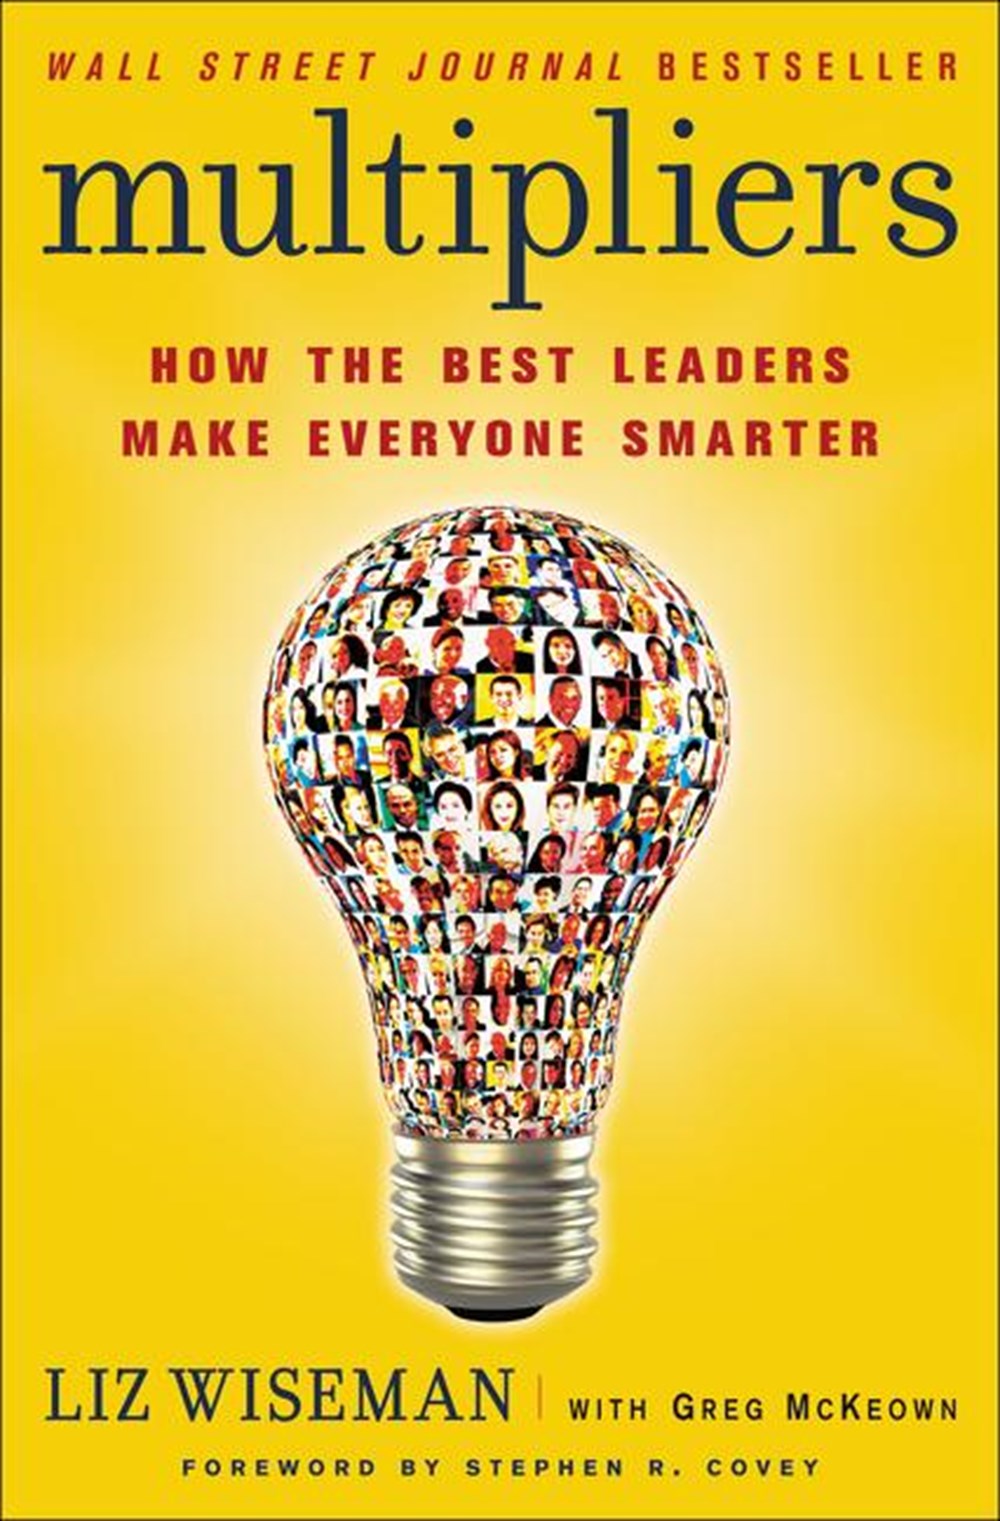 Multipliers: How the Best Leaders Make Everyone Smarter (Revised, Updated)